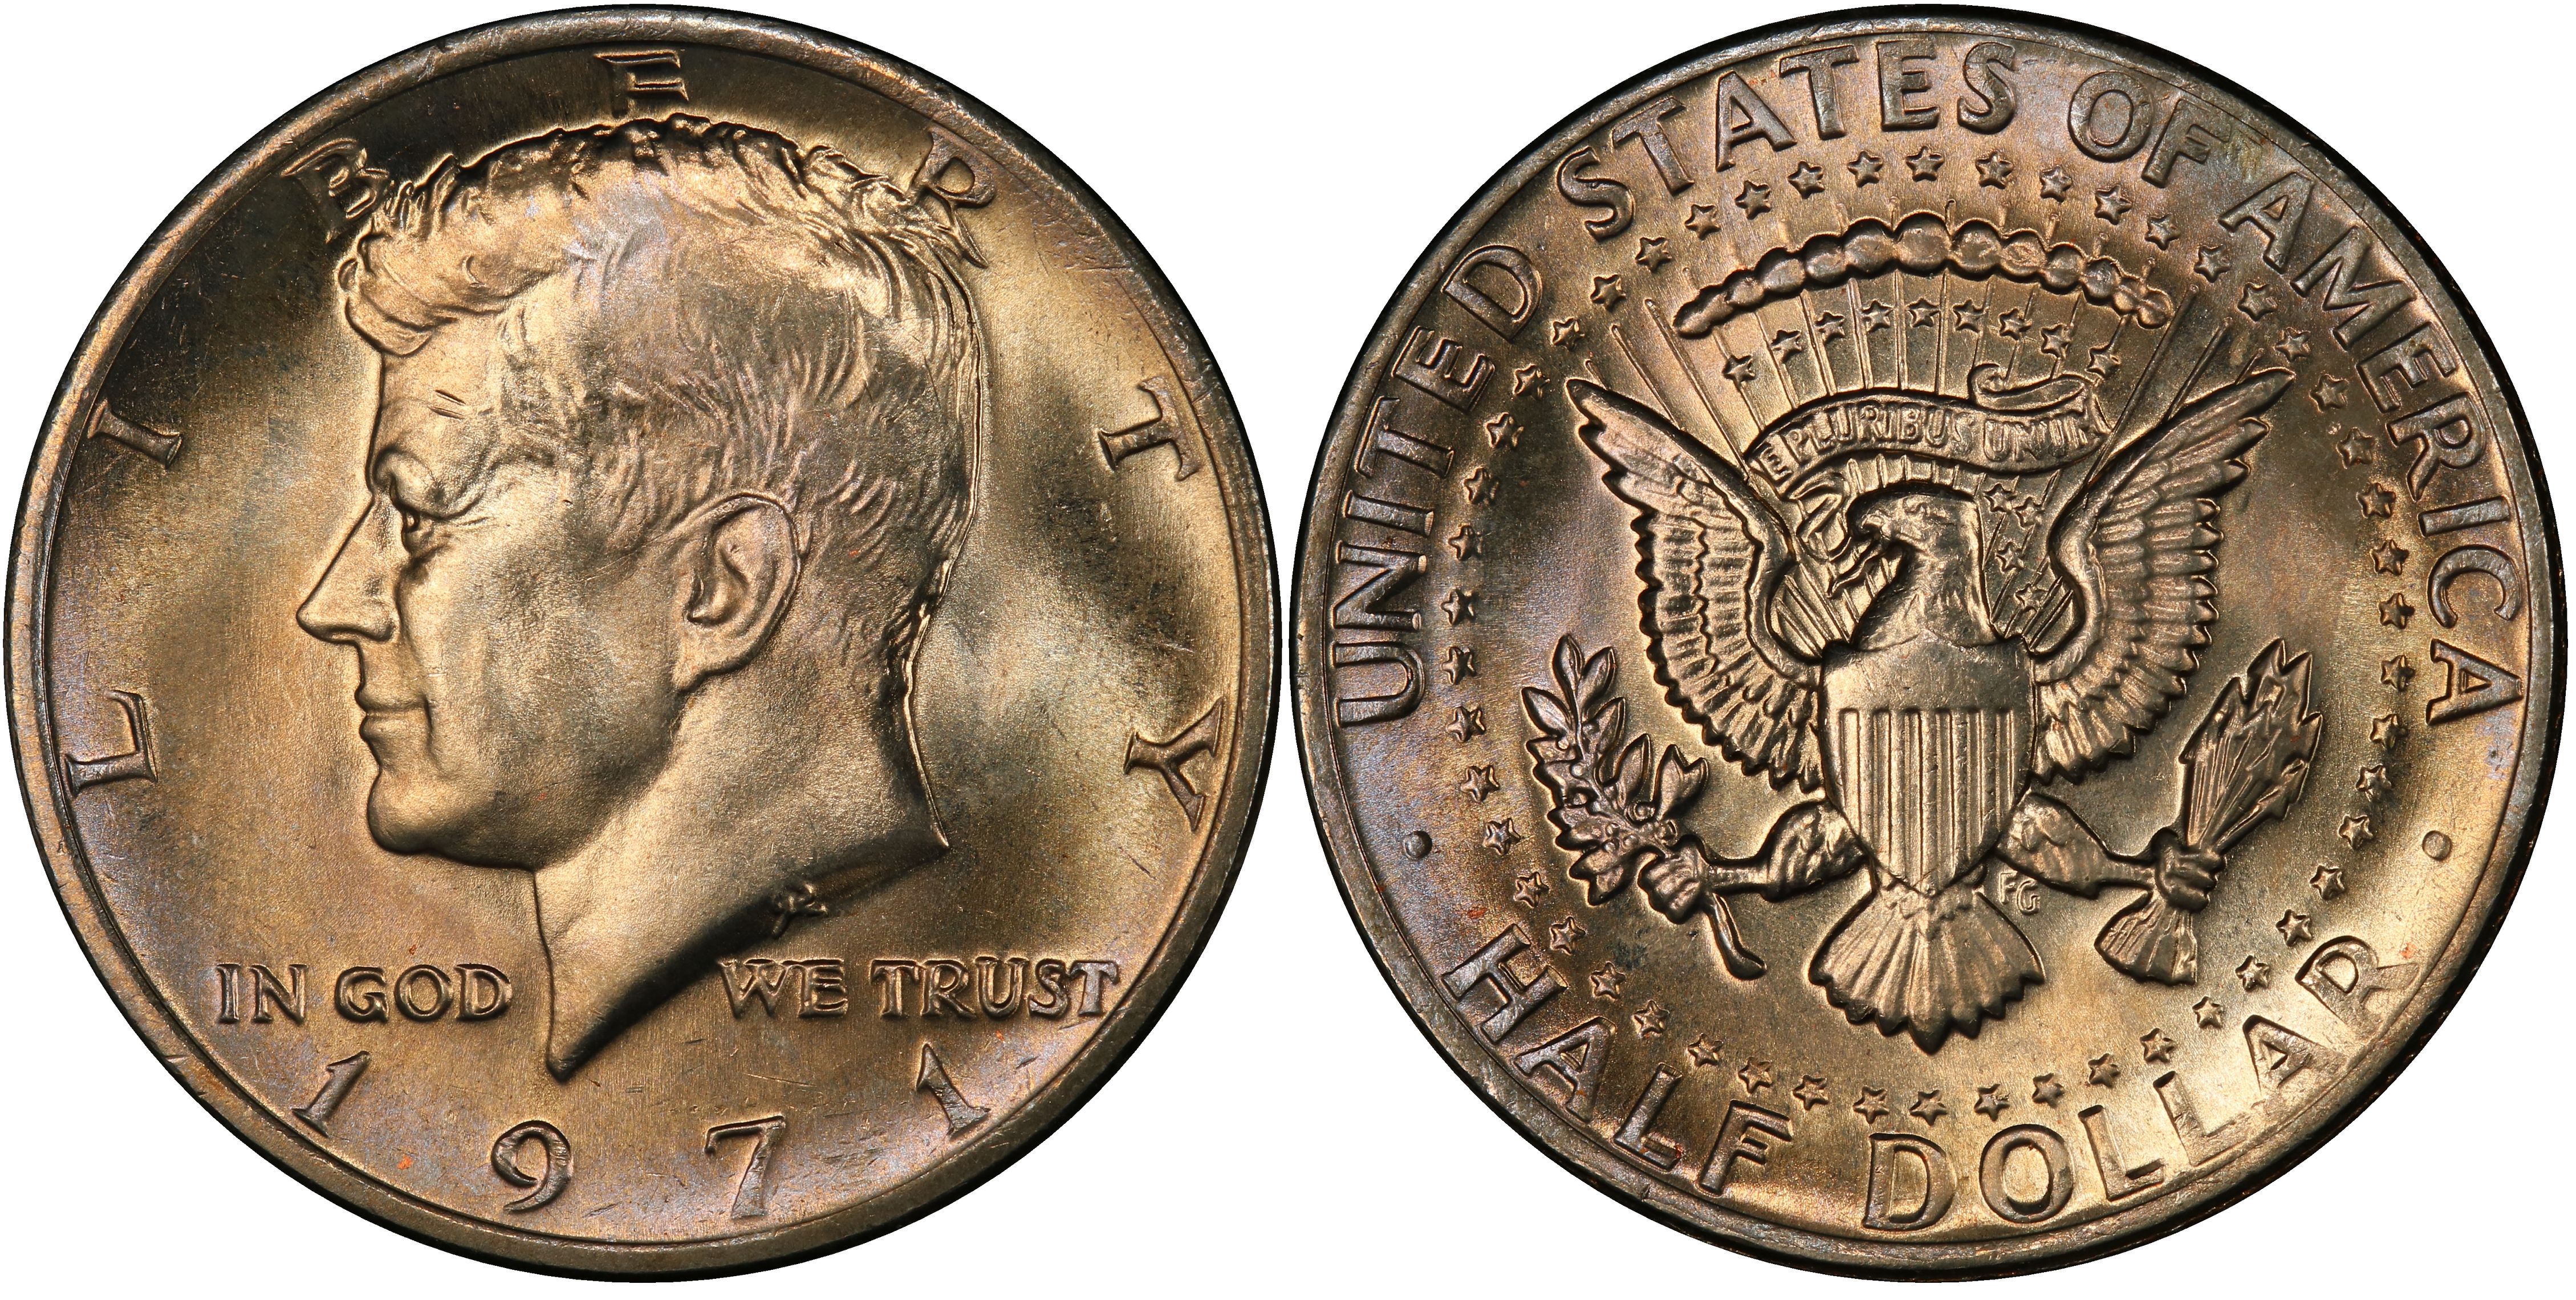 1971 50 cent  coin unc/aunc 